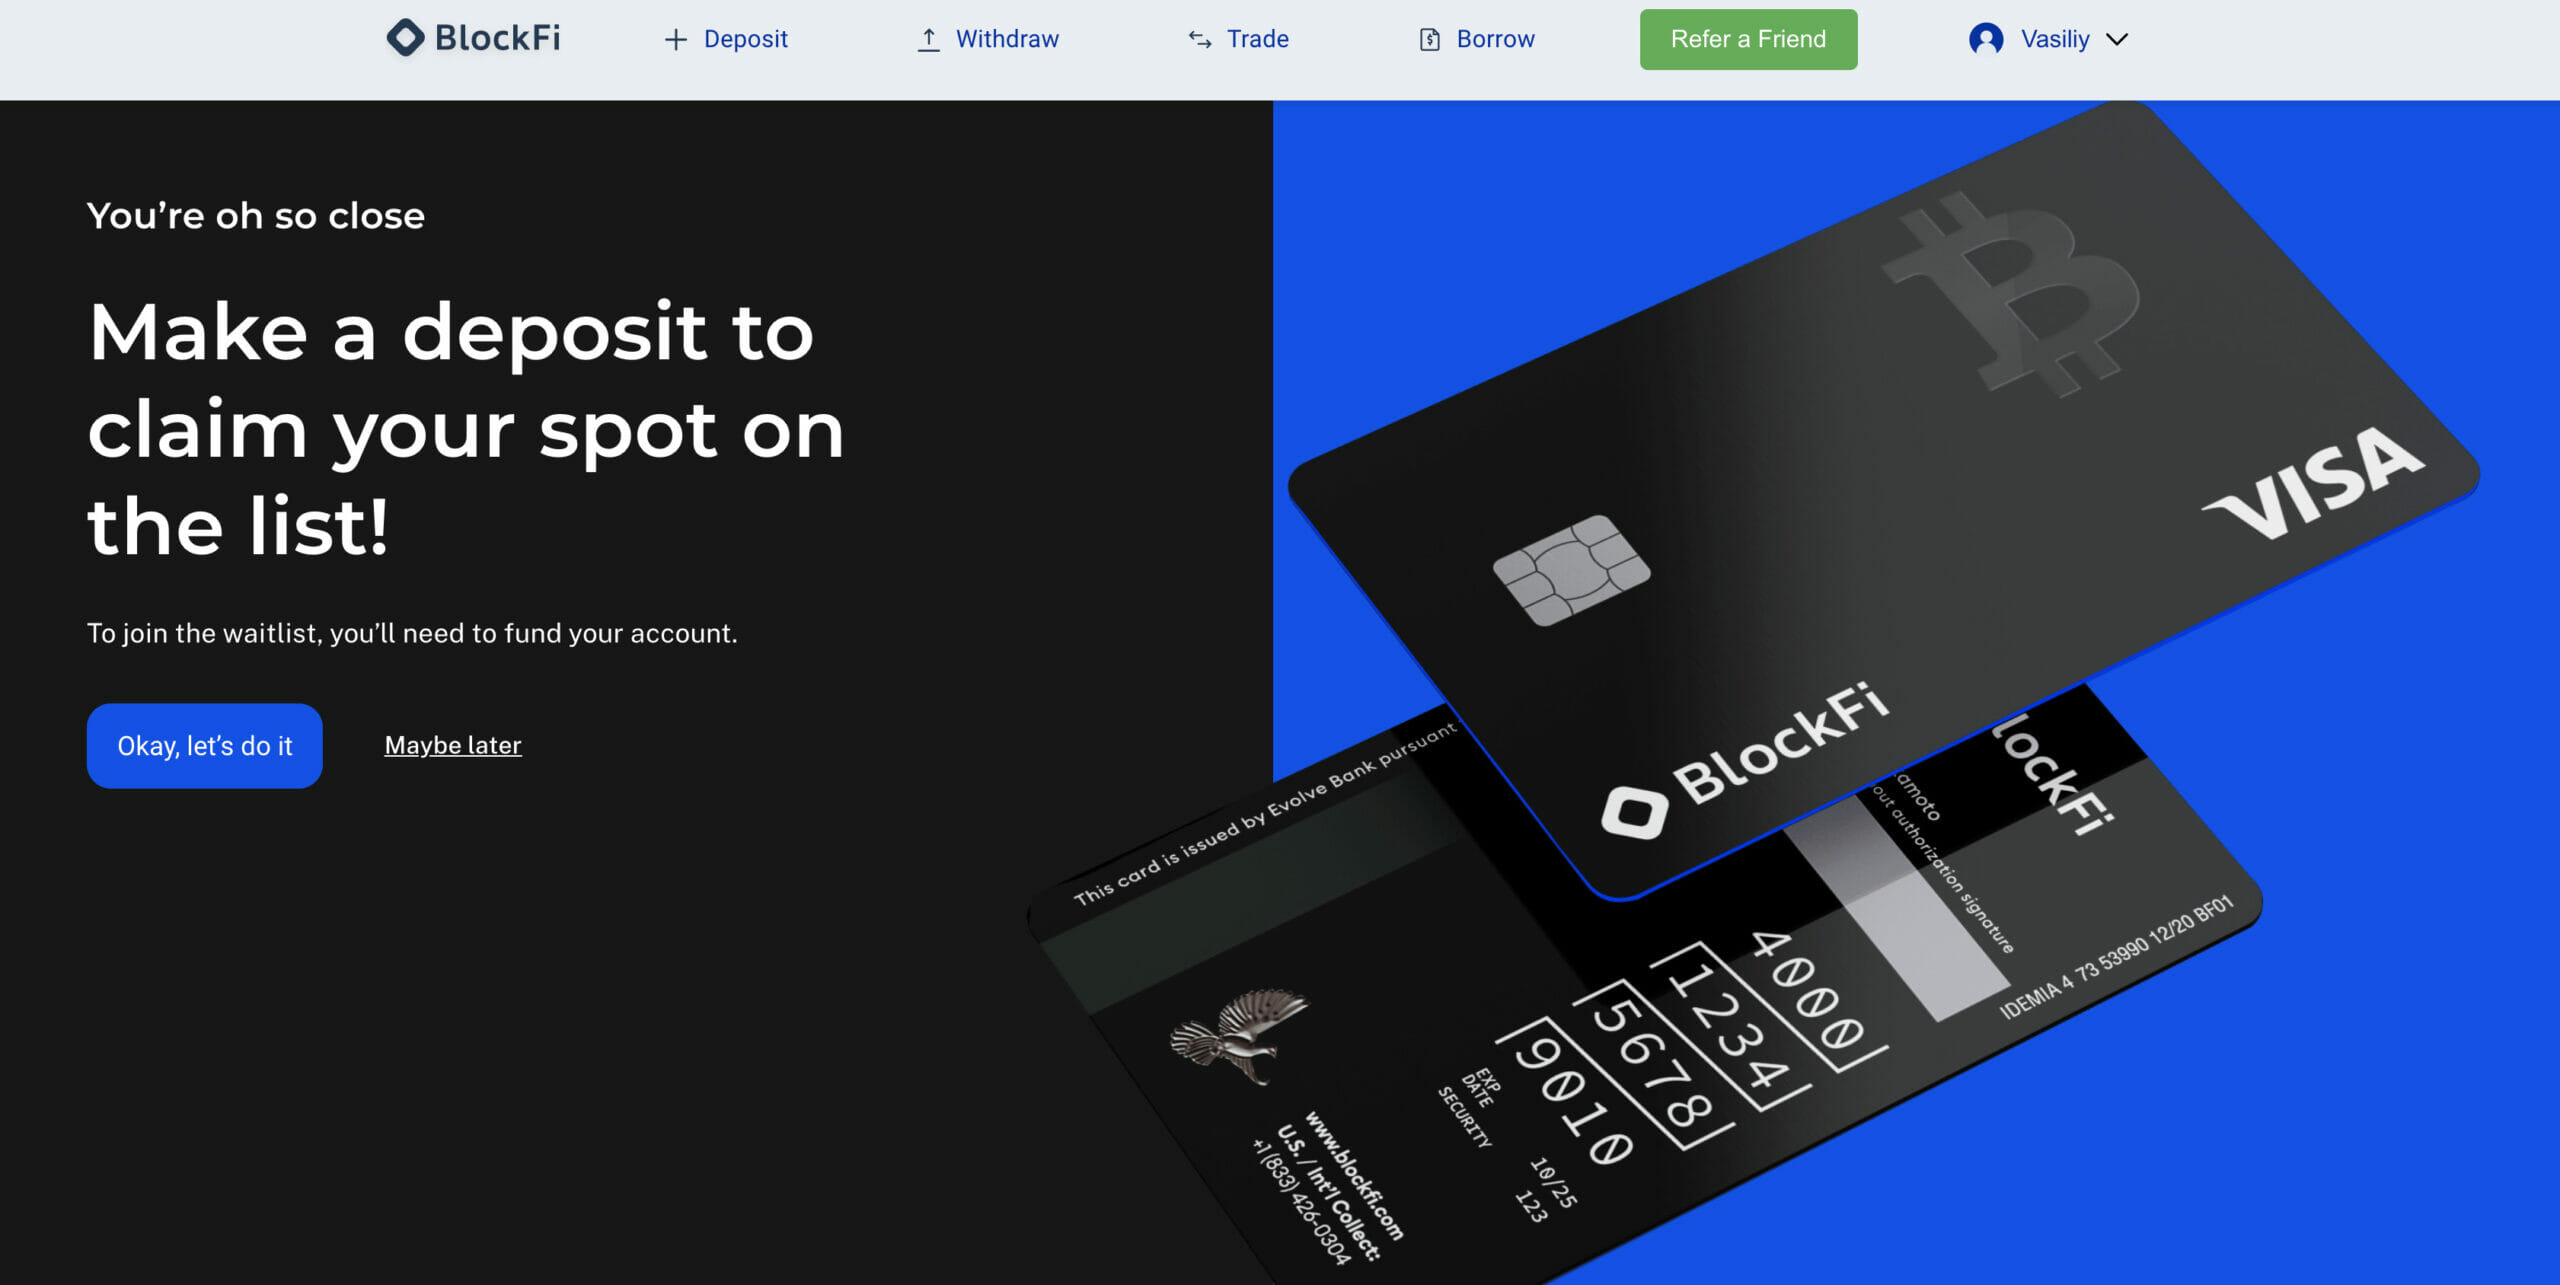 blockfi credit card offer